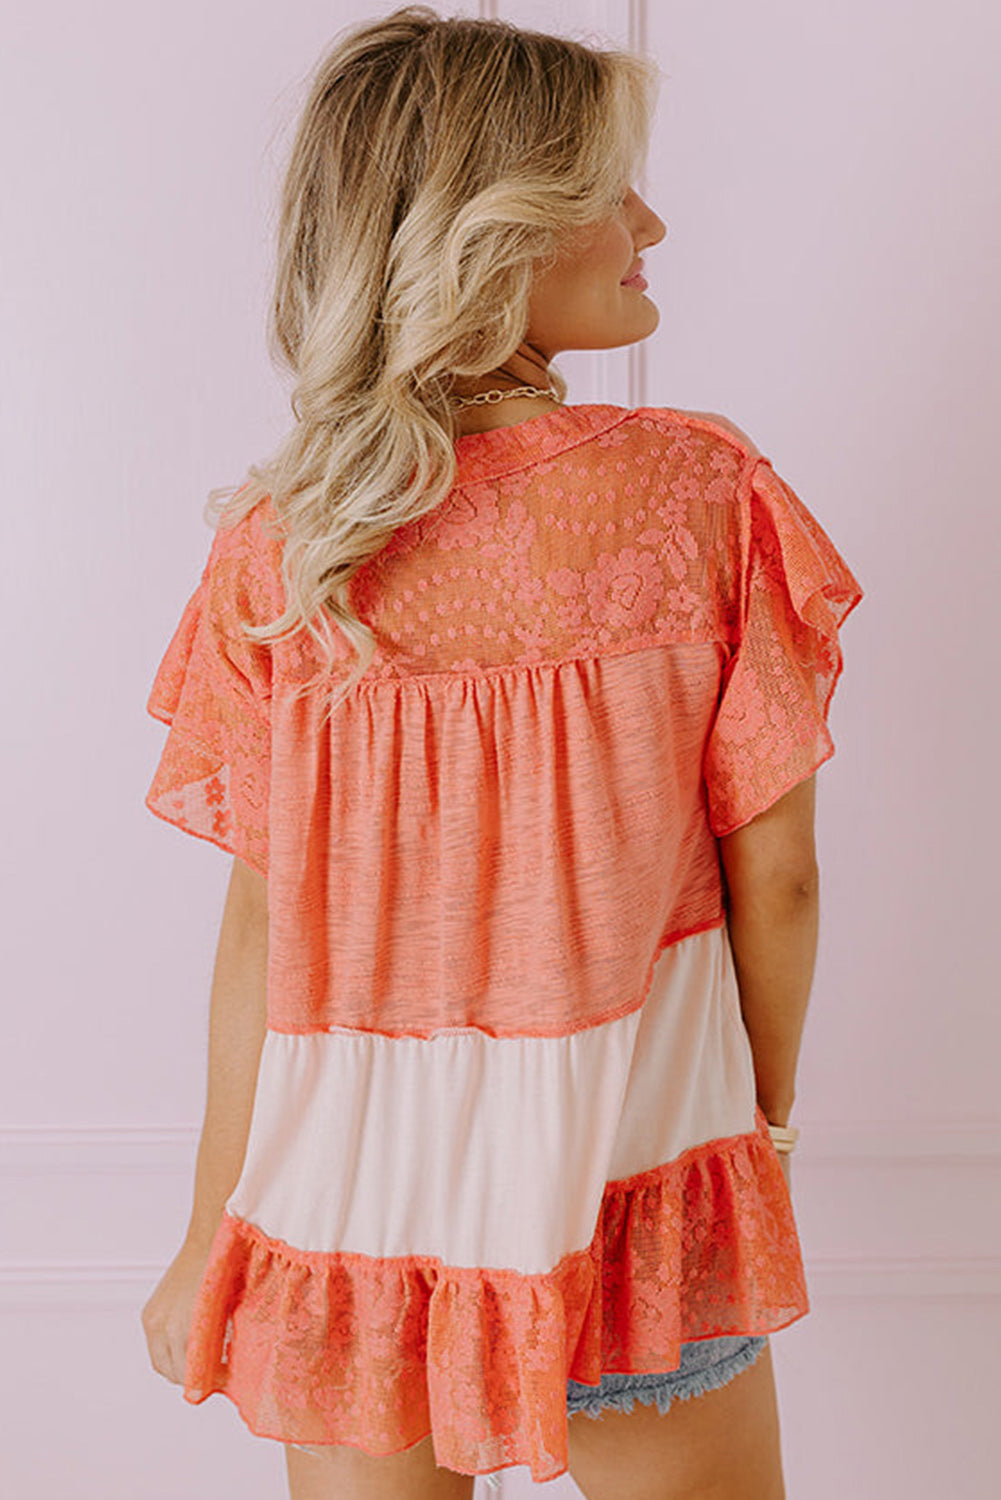 Grapefruit Orange Ruffled Lace Exposed Seam Patchwork Babydoll Top Pre Order Tops JT's Designer Fashion